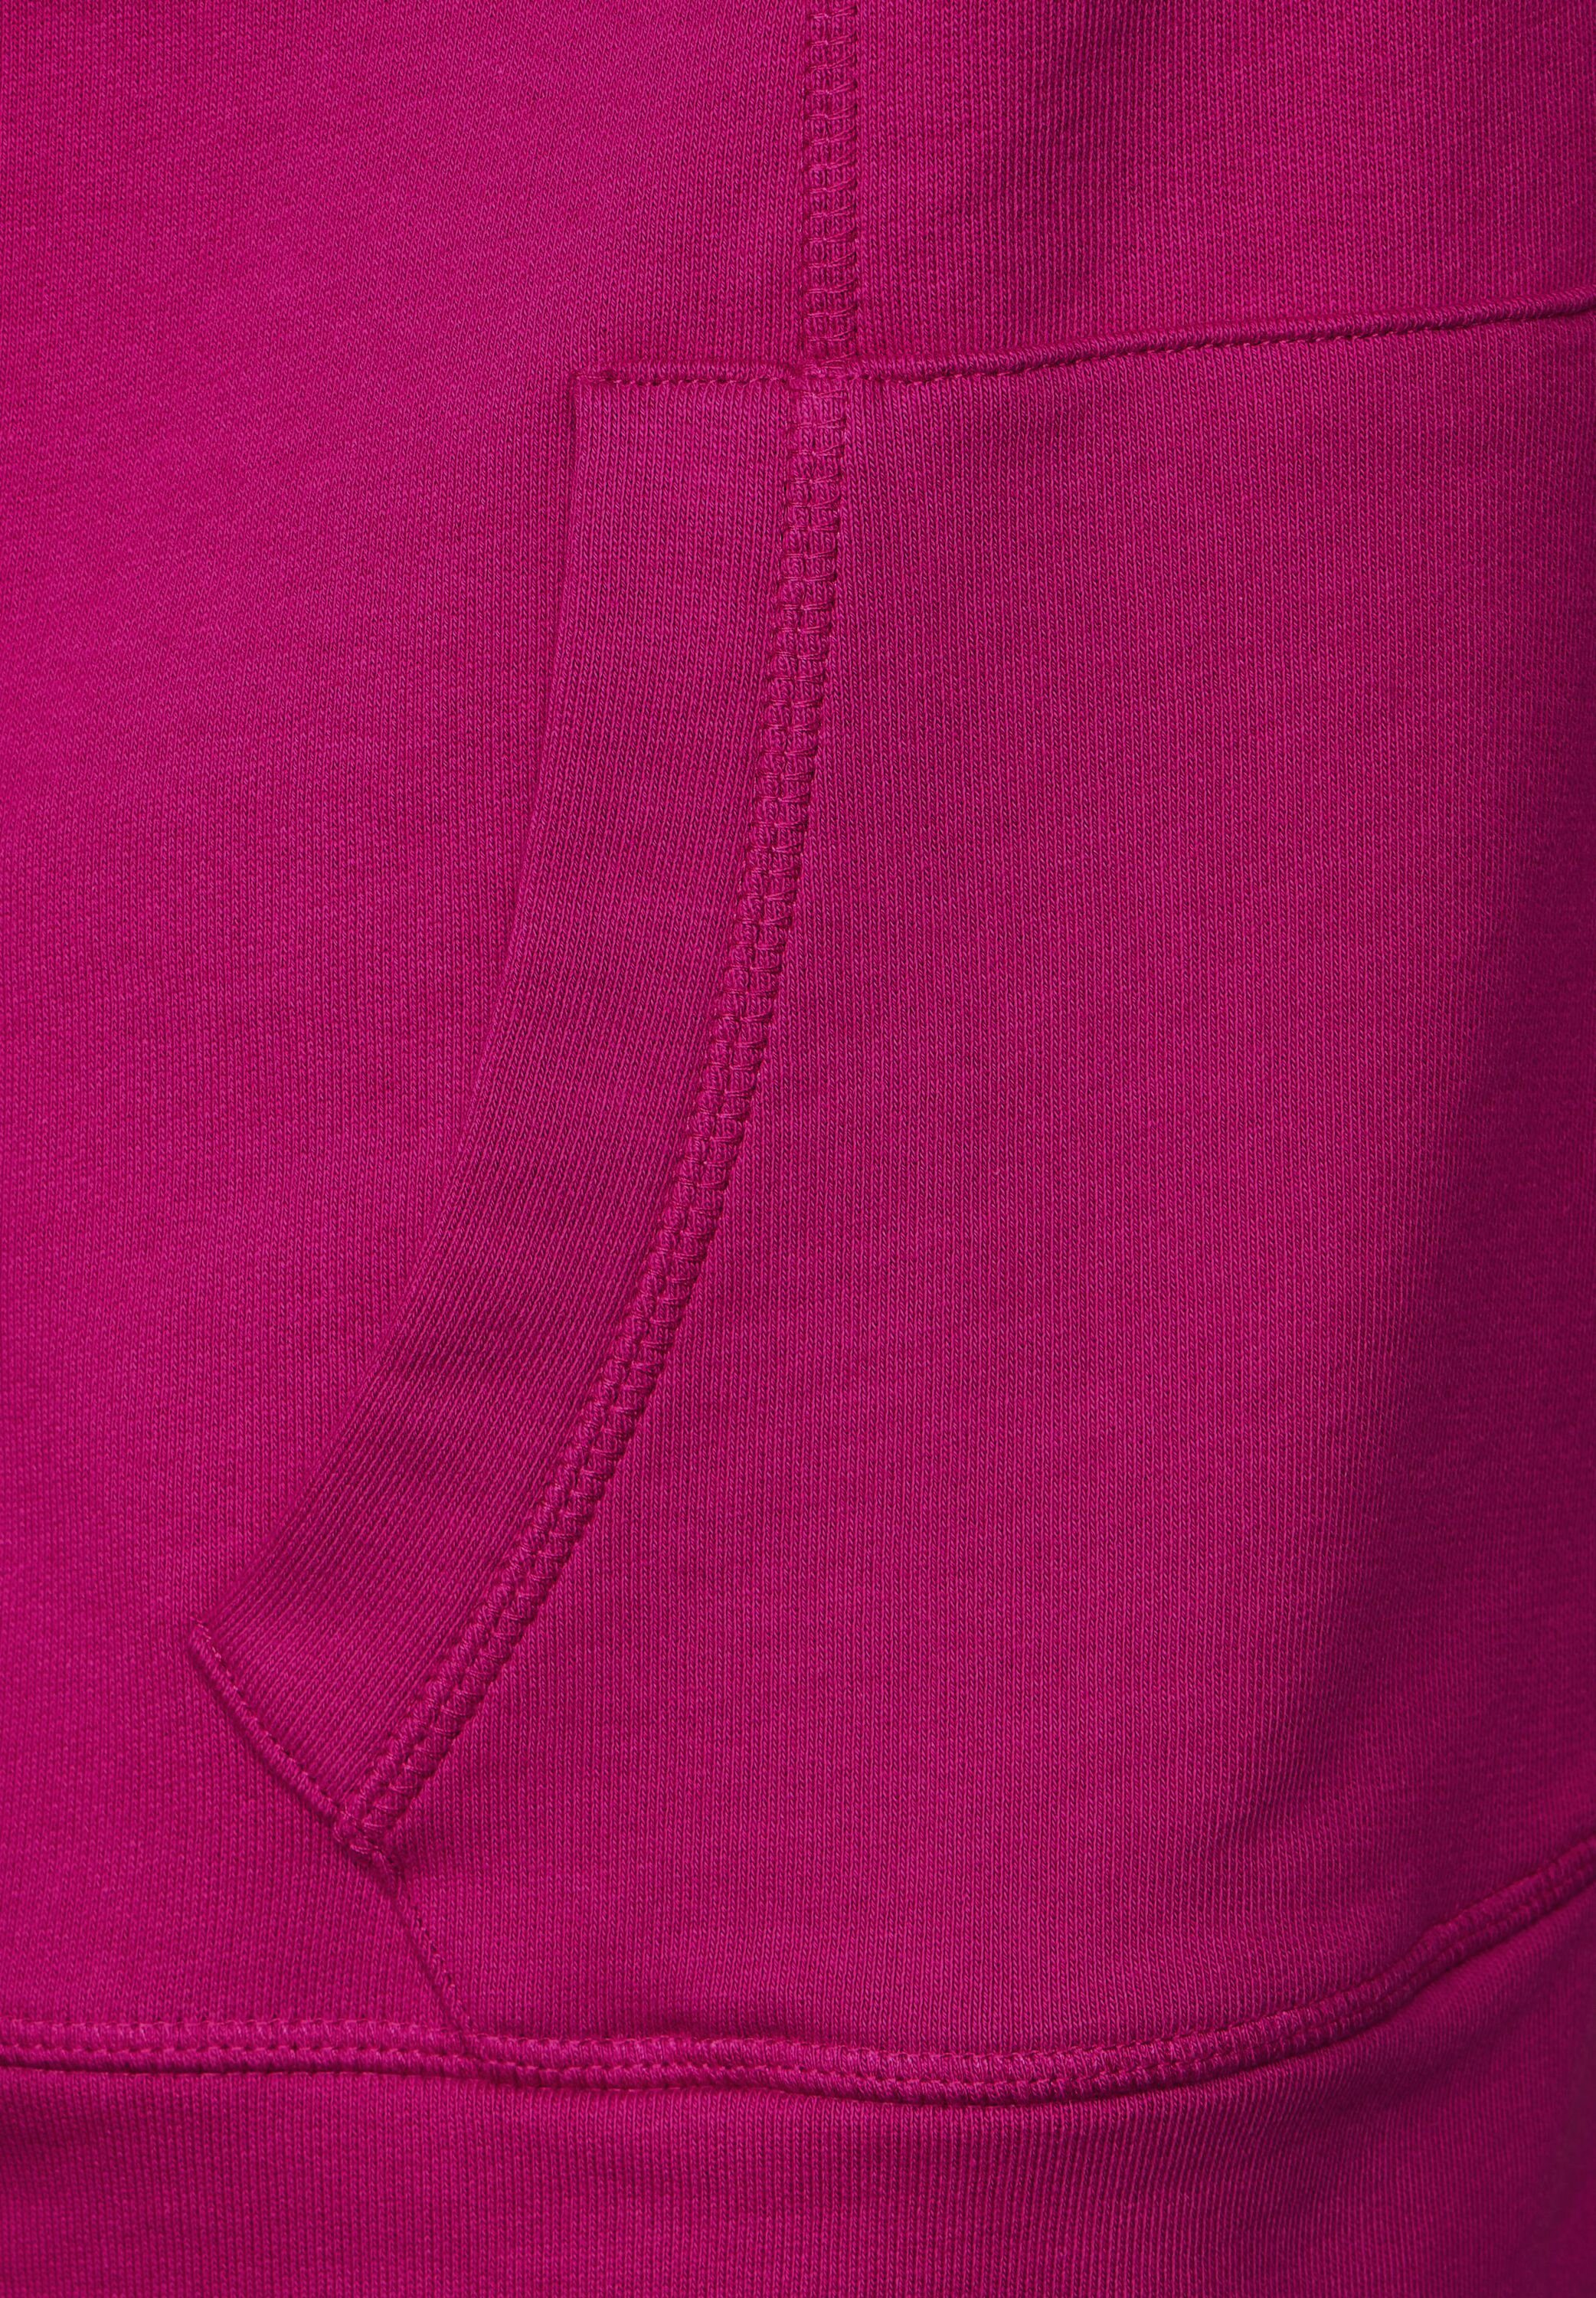 Unifarbe in Cecil Sweatjacke cool pink